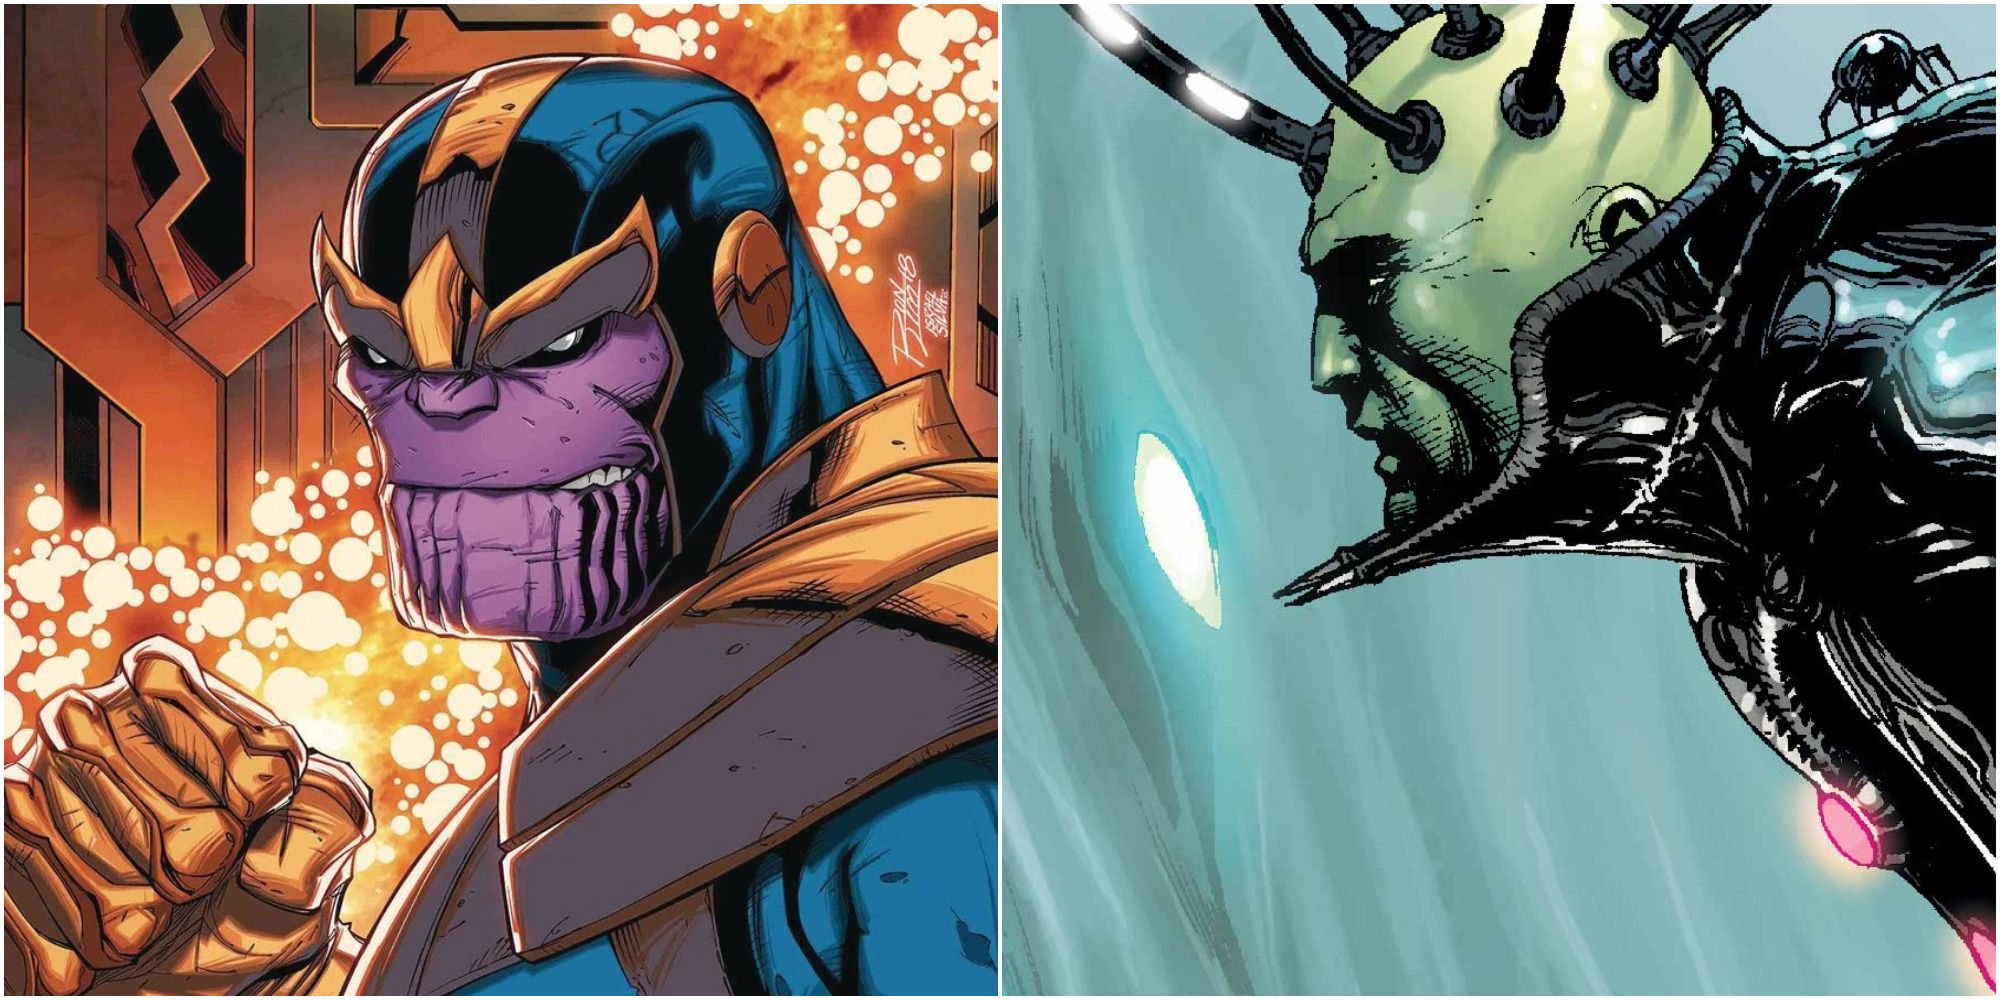 Thanos and Brainiac